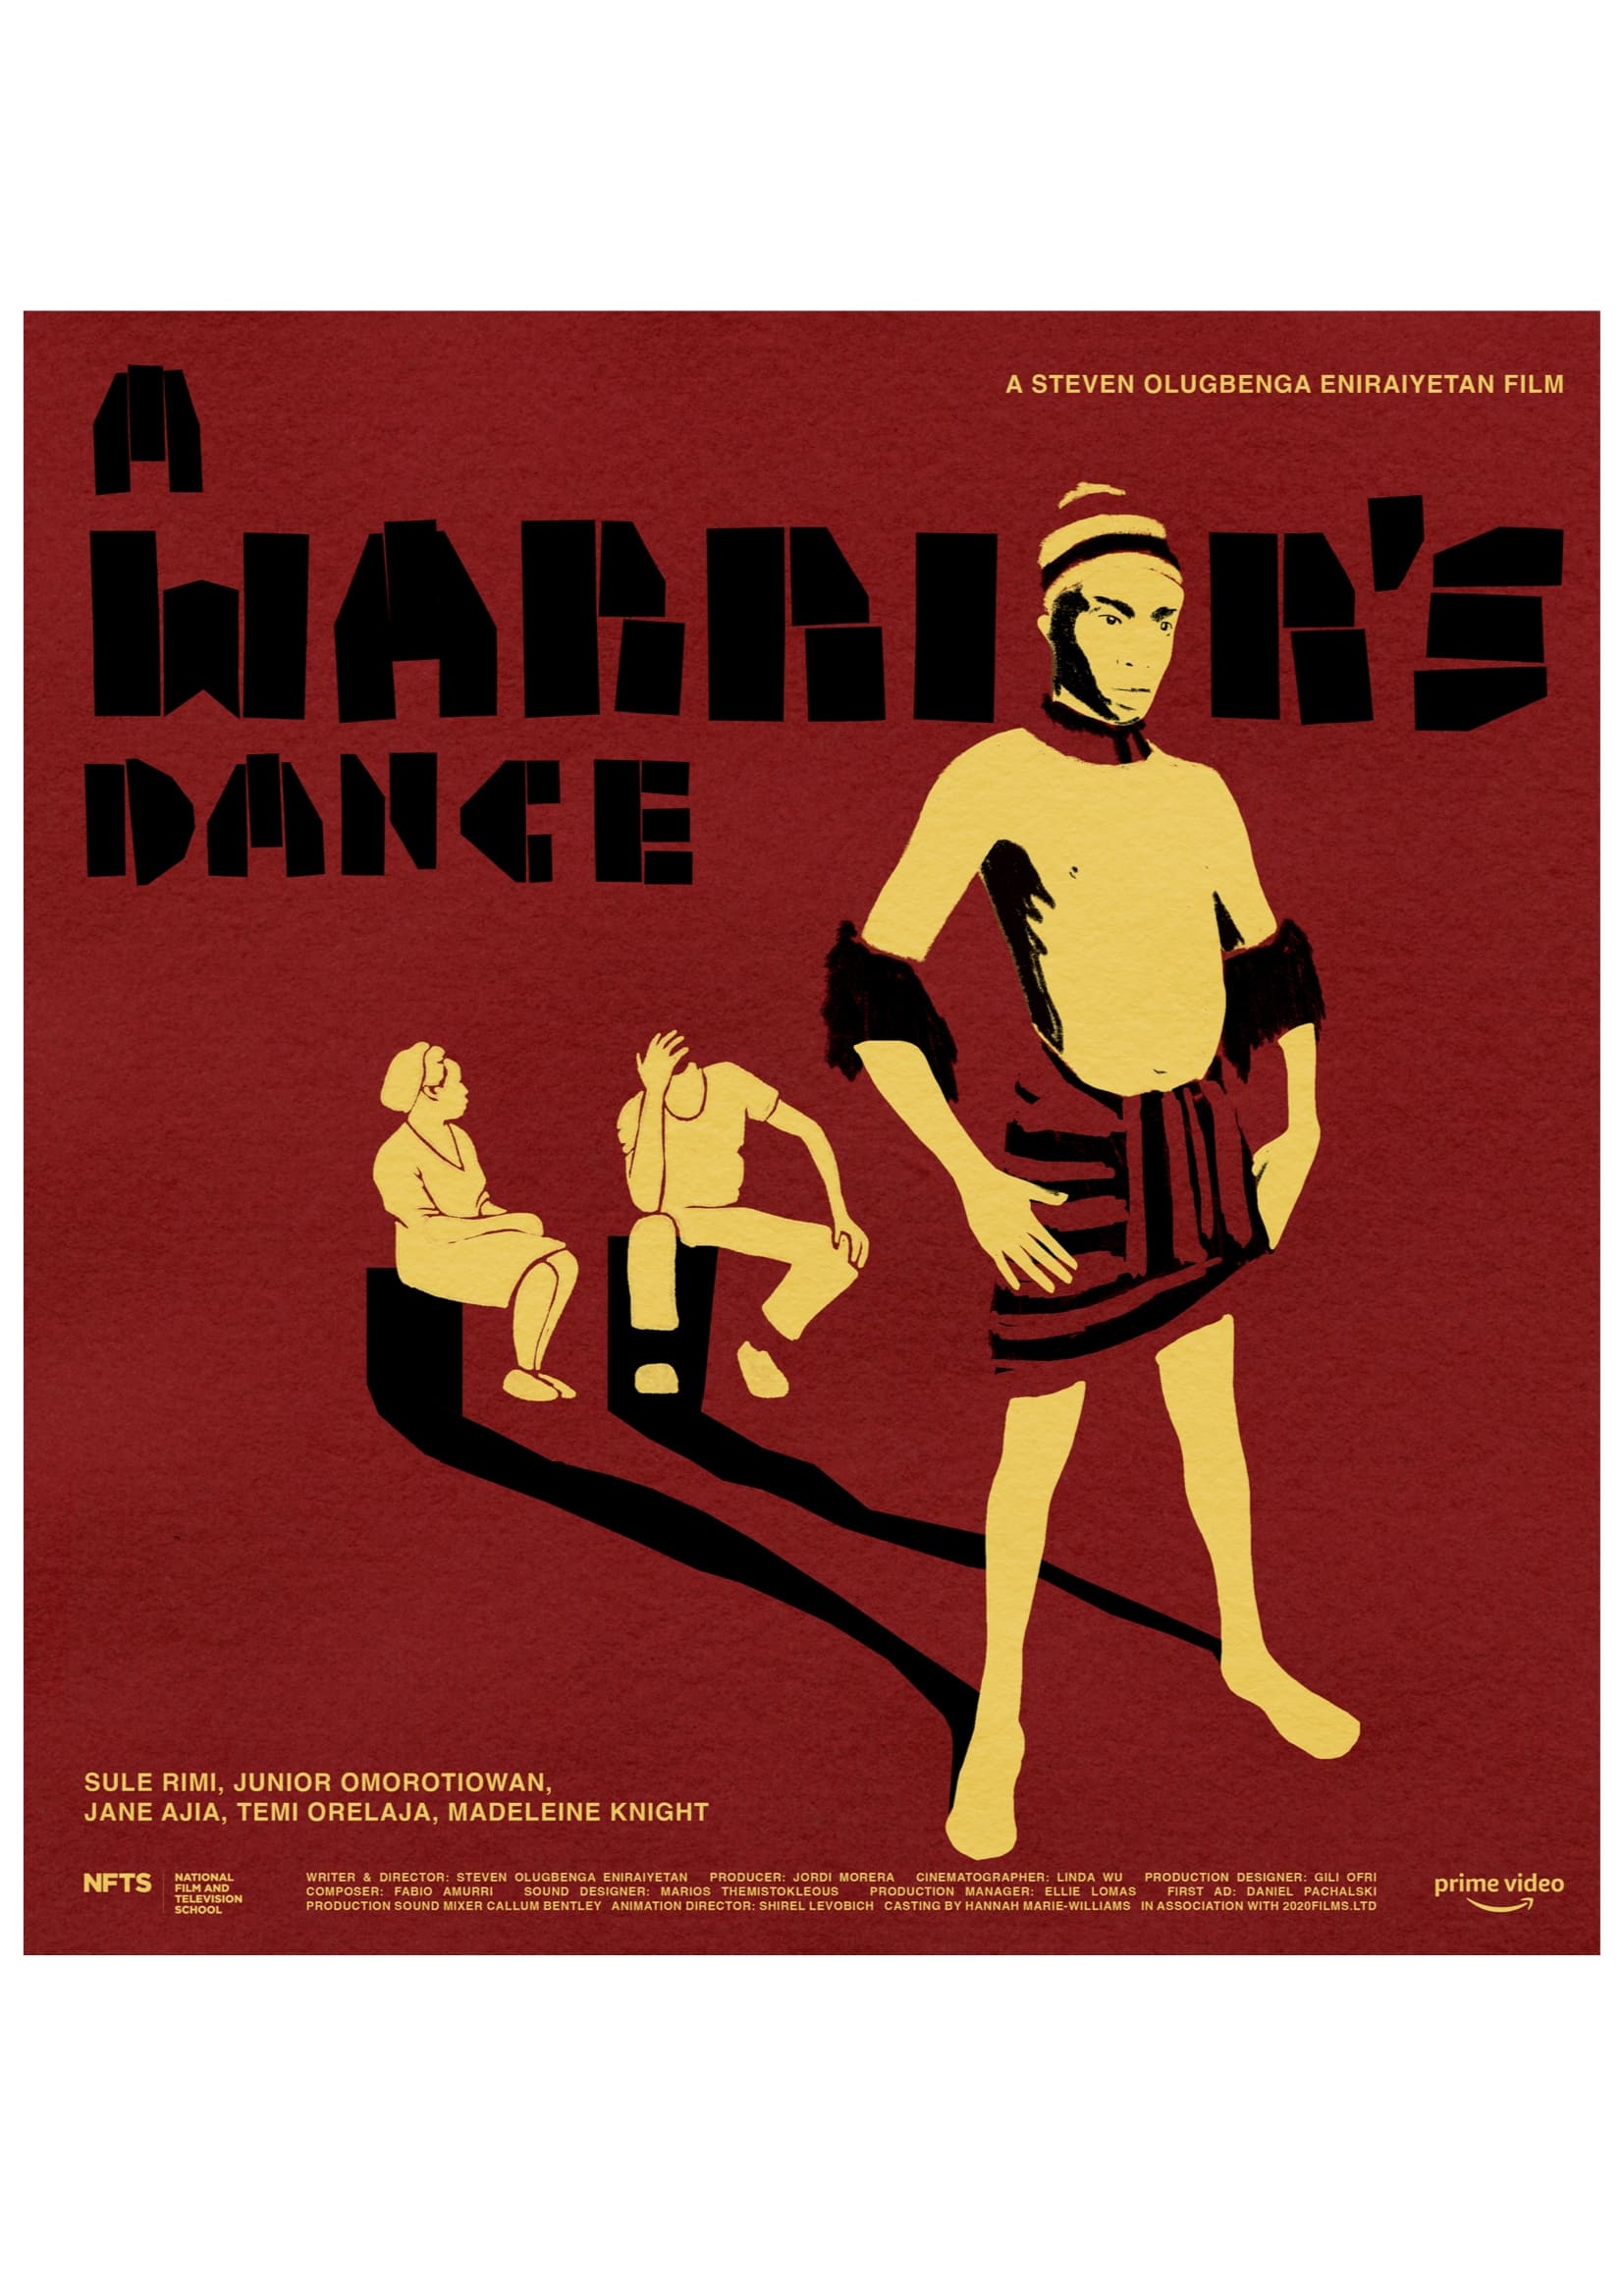 A Warrior's Dance